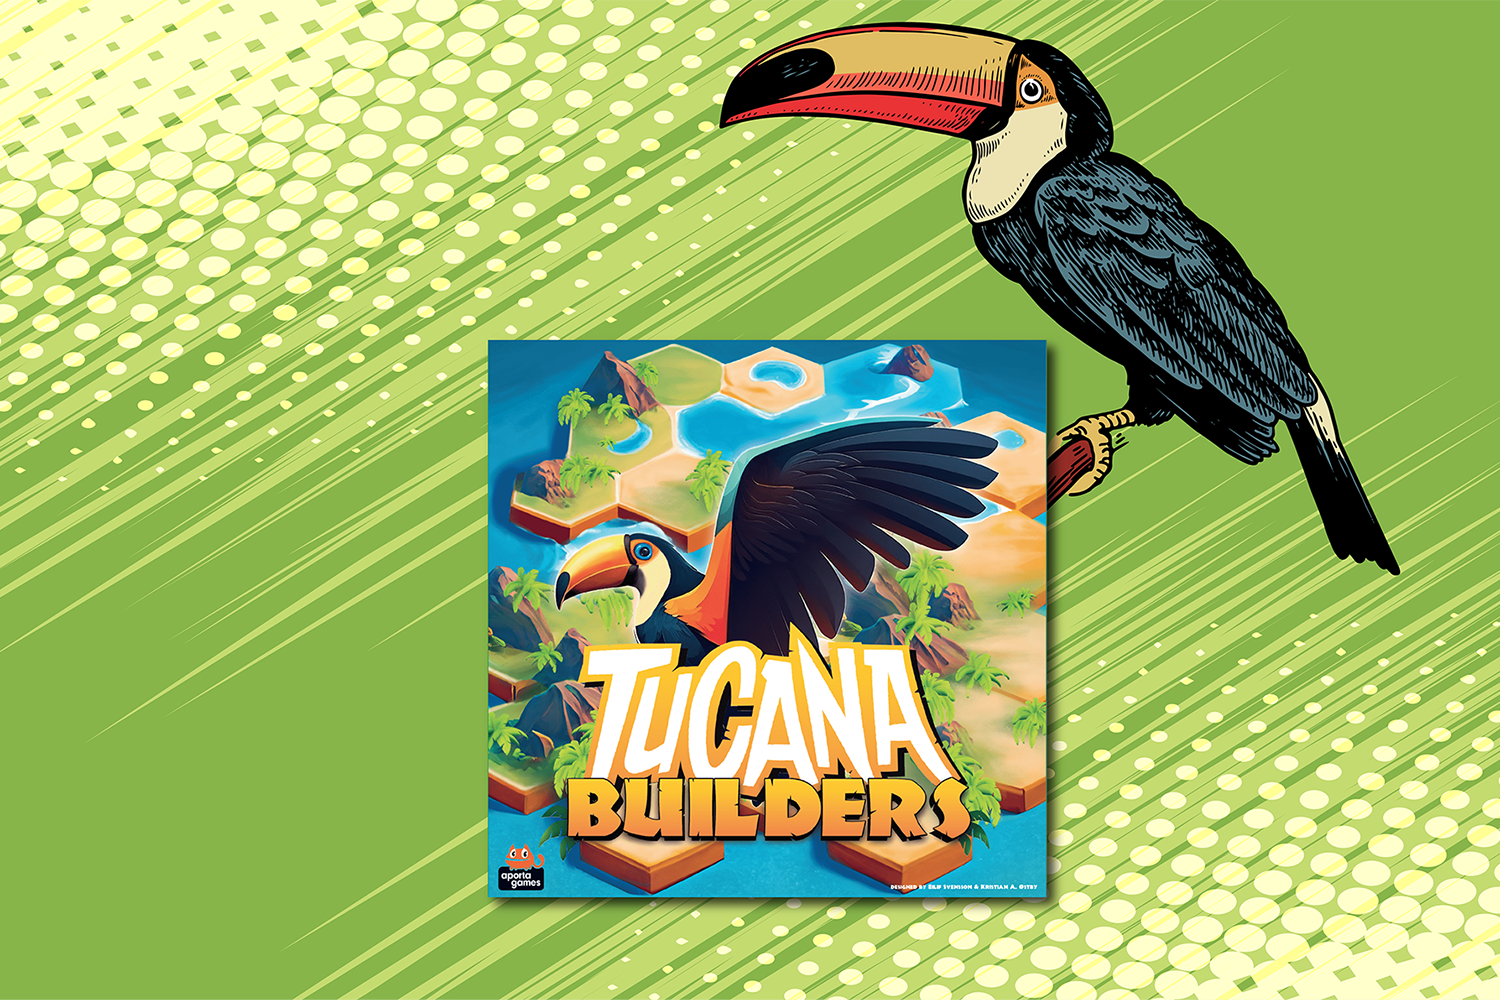 Tucana Builders Board Game Review Header Image